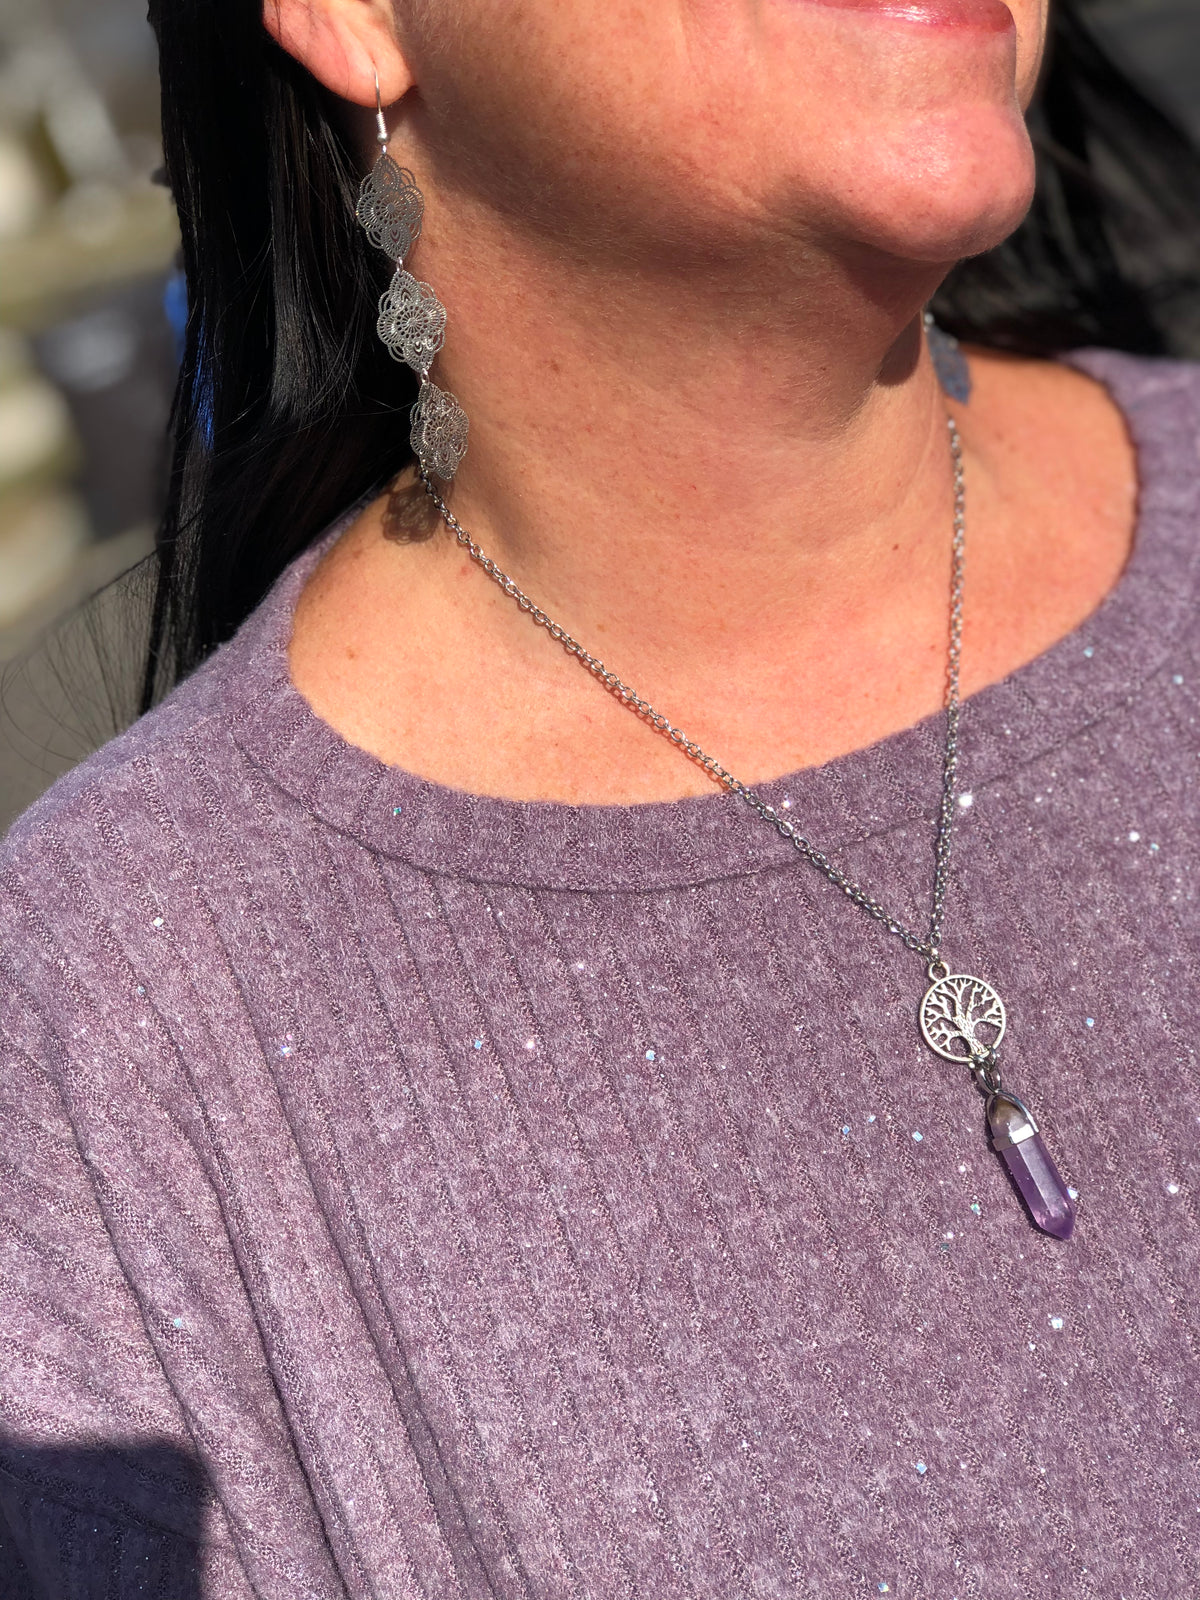 Crystal Gemstone Pendant Necklace - Amethyst - Lapis Lazuli - Malachite - Rose Quartz - Sun & Moon, Tree of Life, Fairy, Infinity Heart